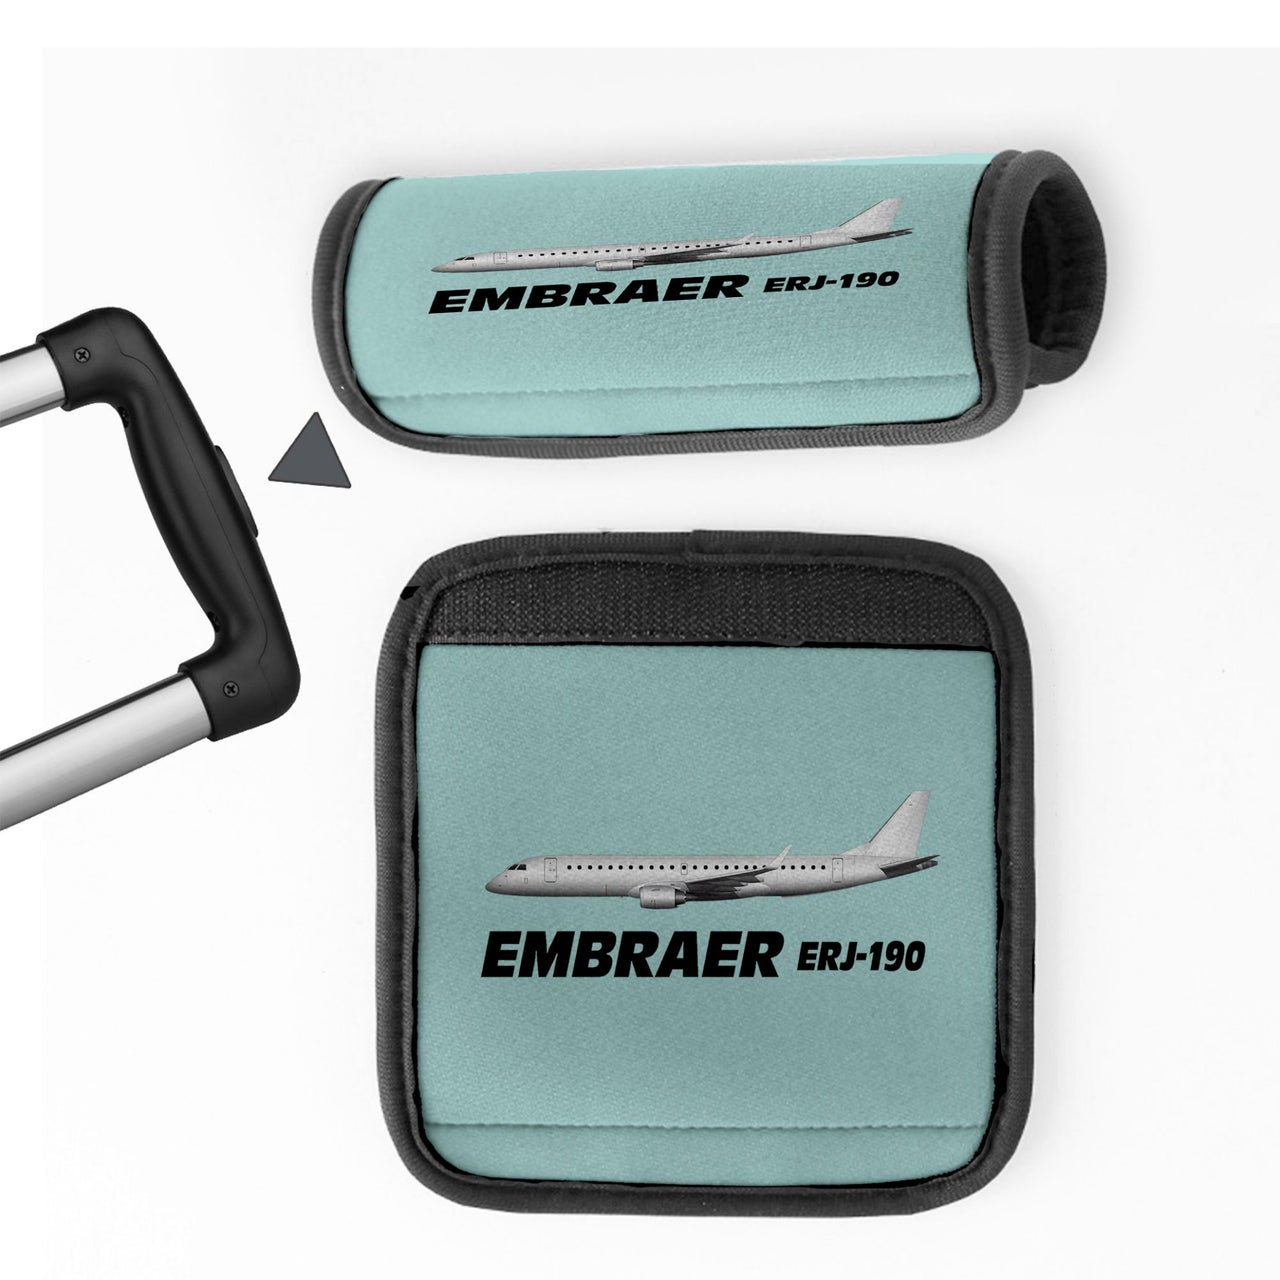 The Embraer ERJ-190 Designed Neoprene Luggage Handle Covers